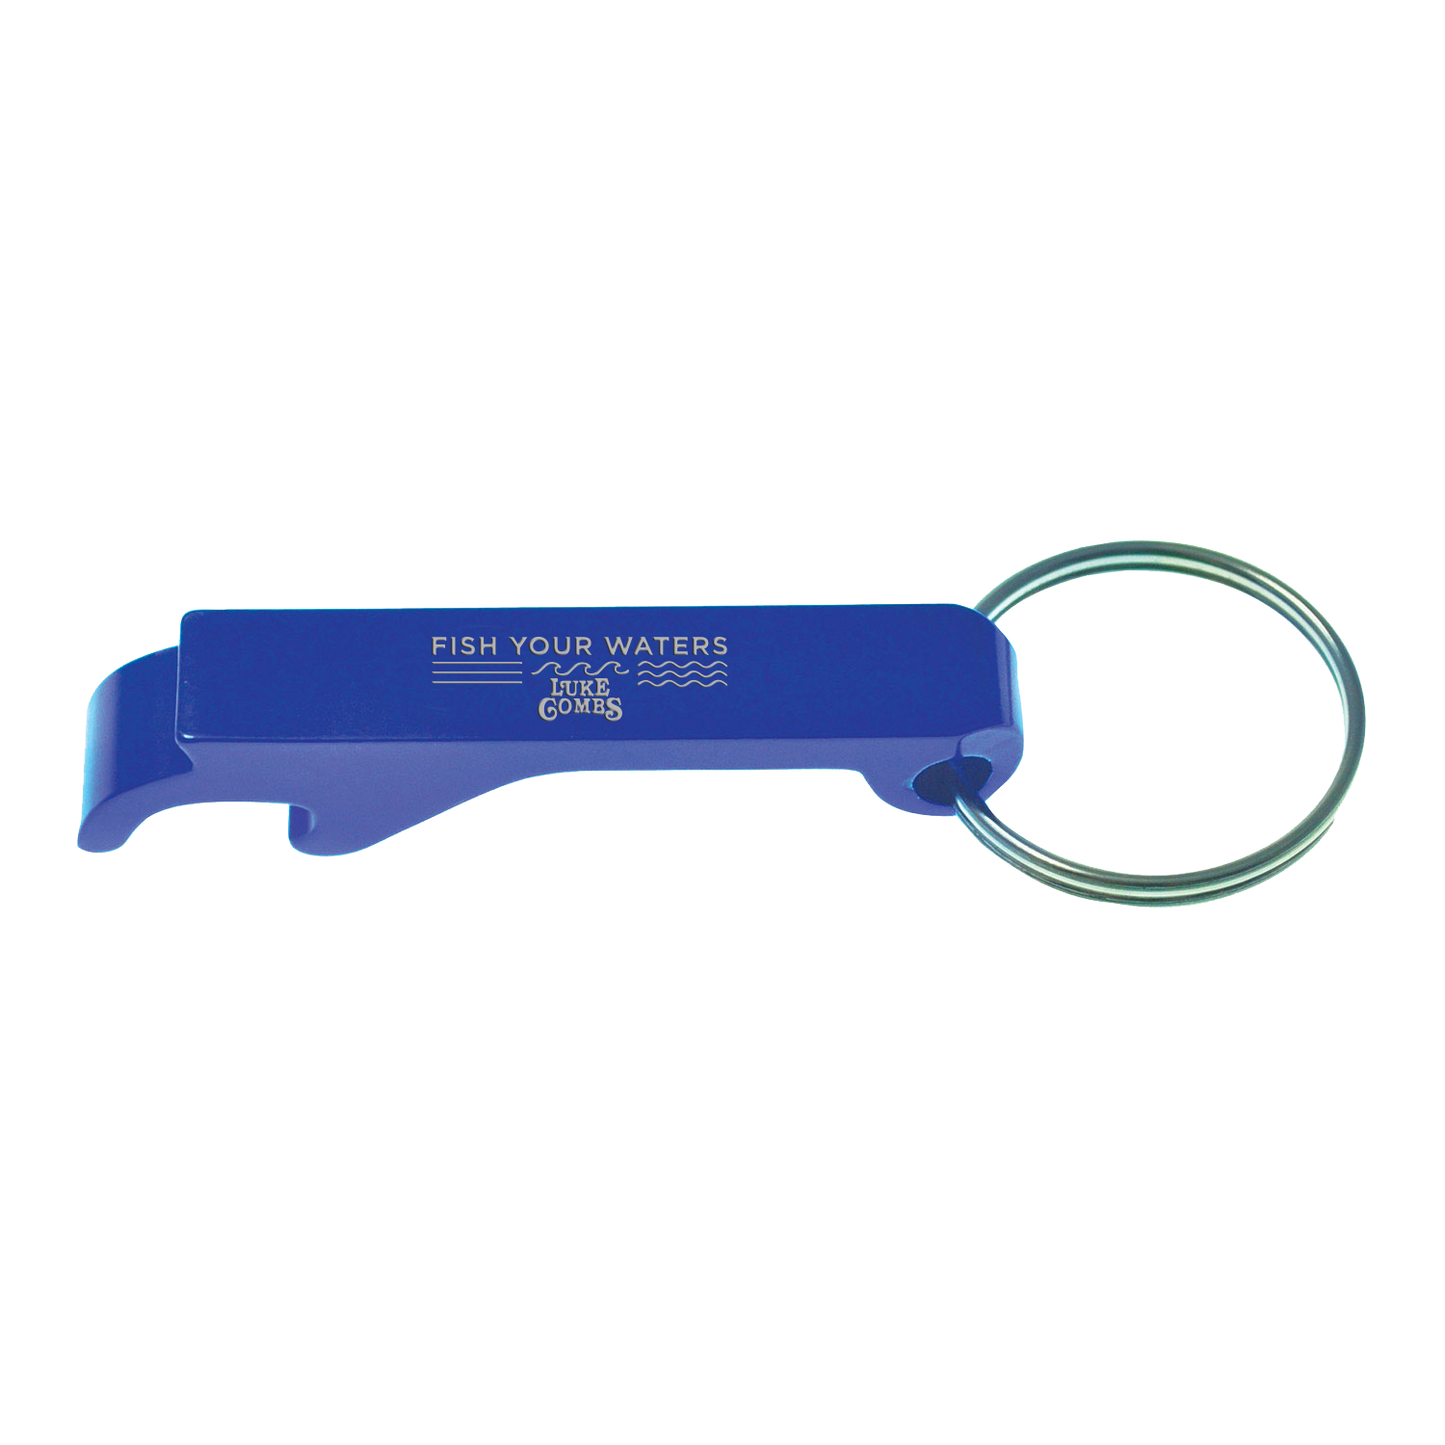 FYW Bottle Opener Keychain - Royal